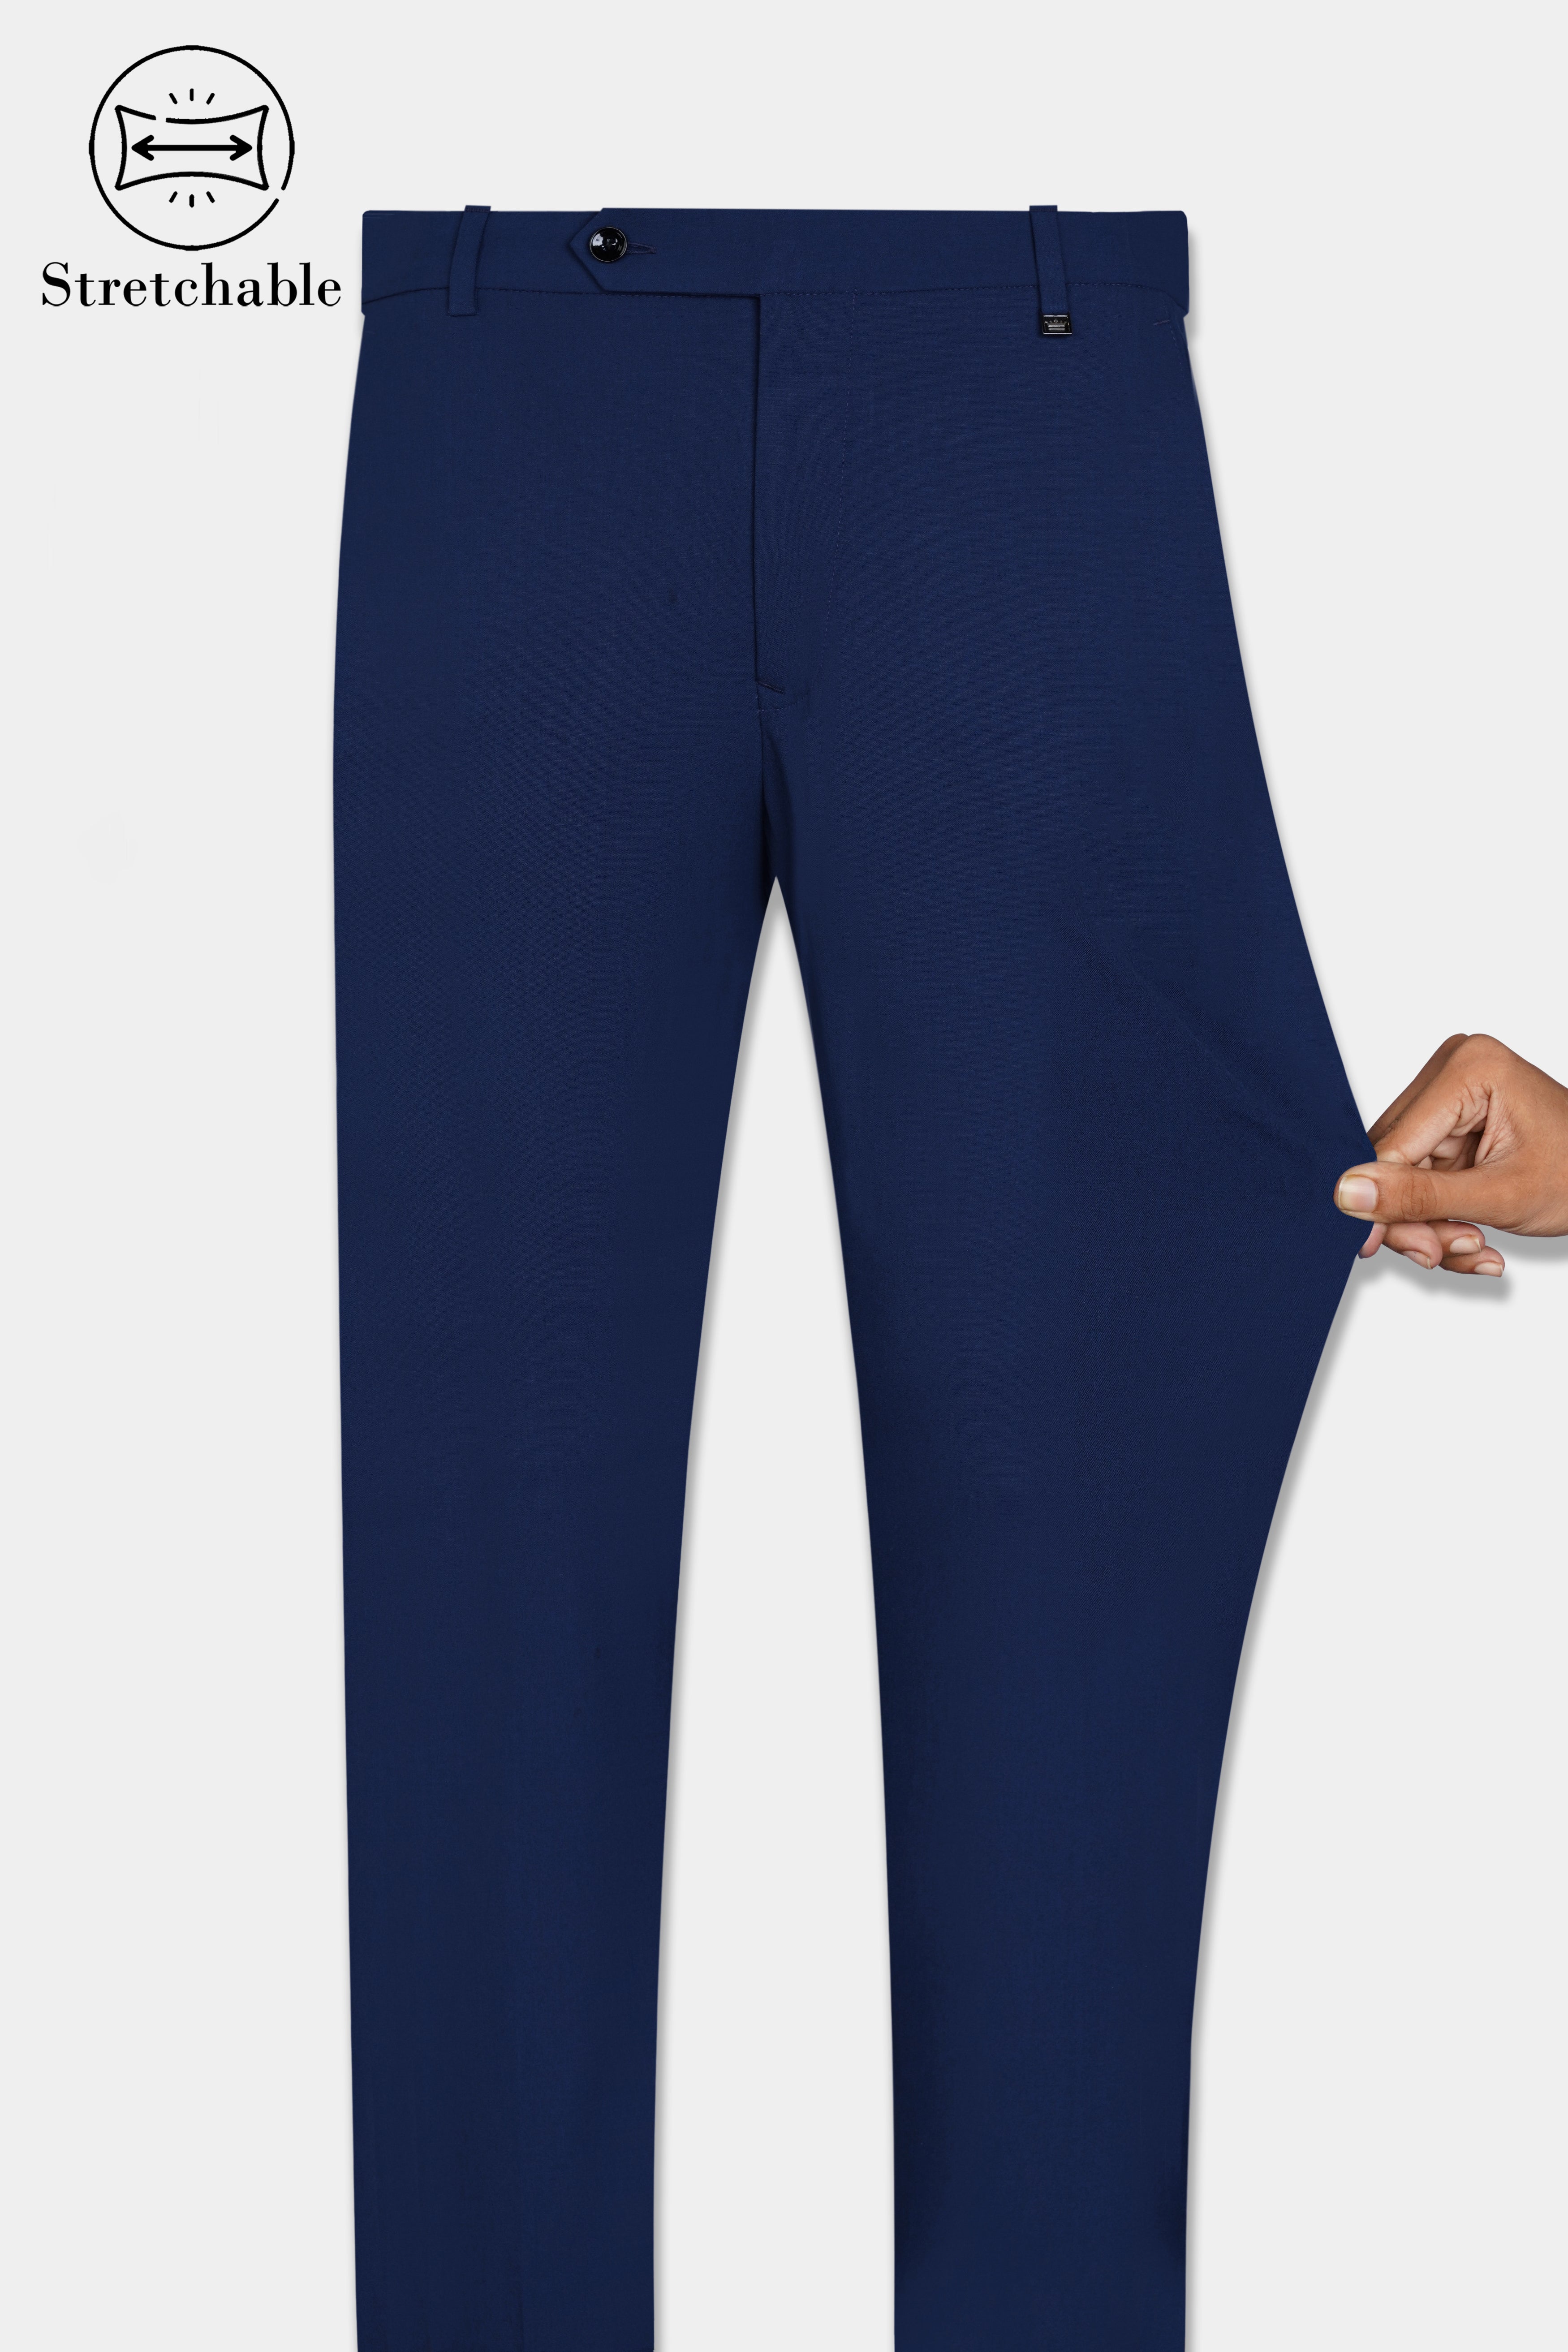 Mantova Dark Blue Slim Fit Cotton Pants freeshipping - BOJONI | Blue pants  men, Men's blue pants, Slim fit cotton pants